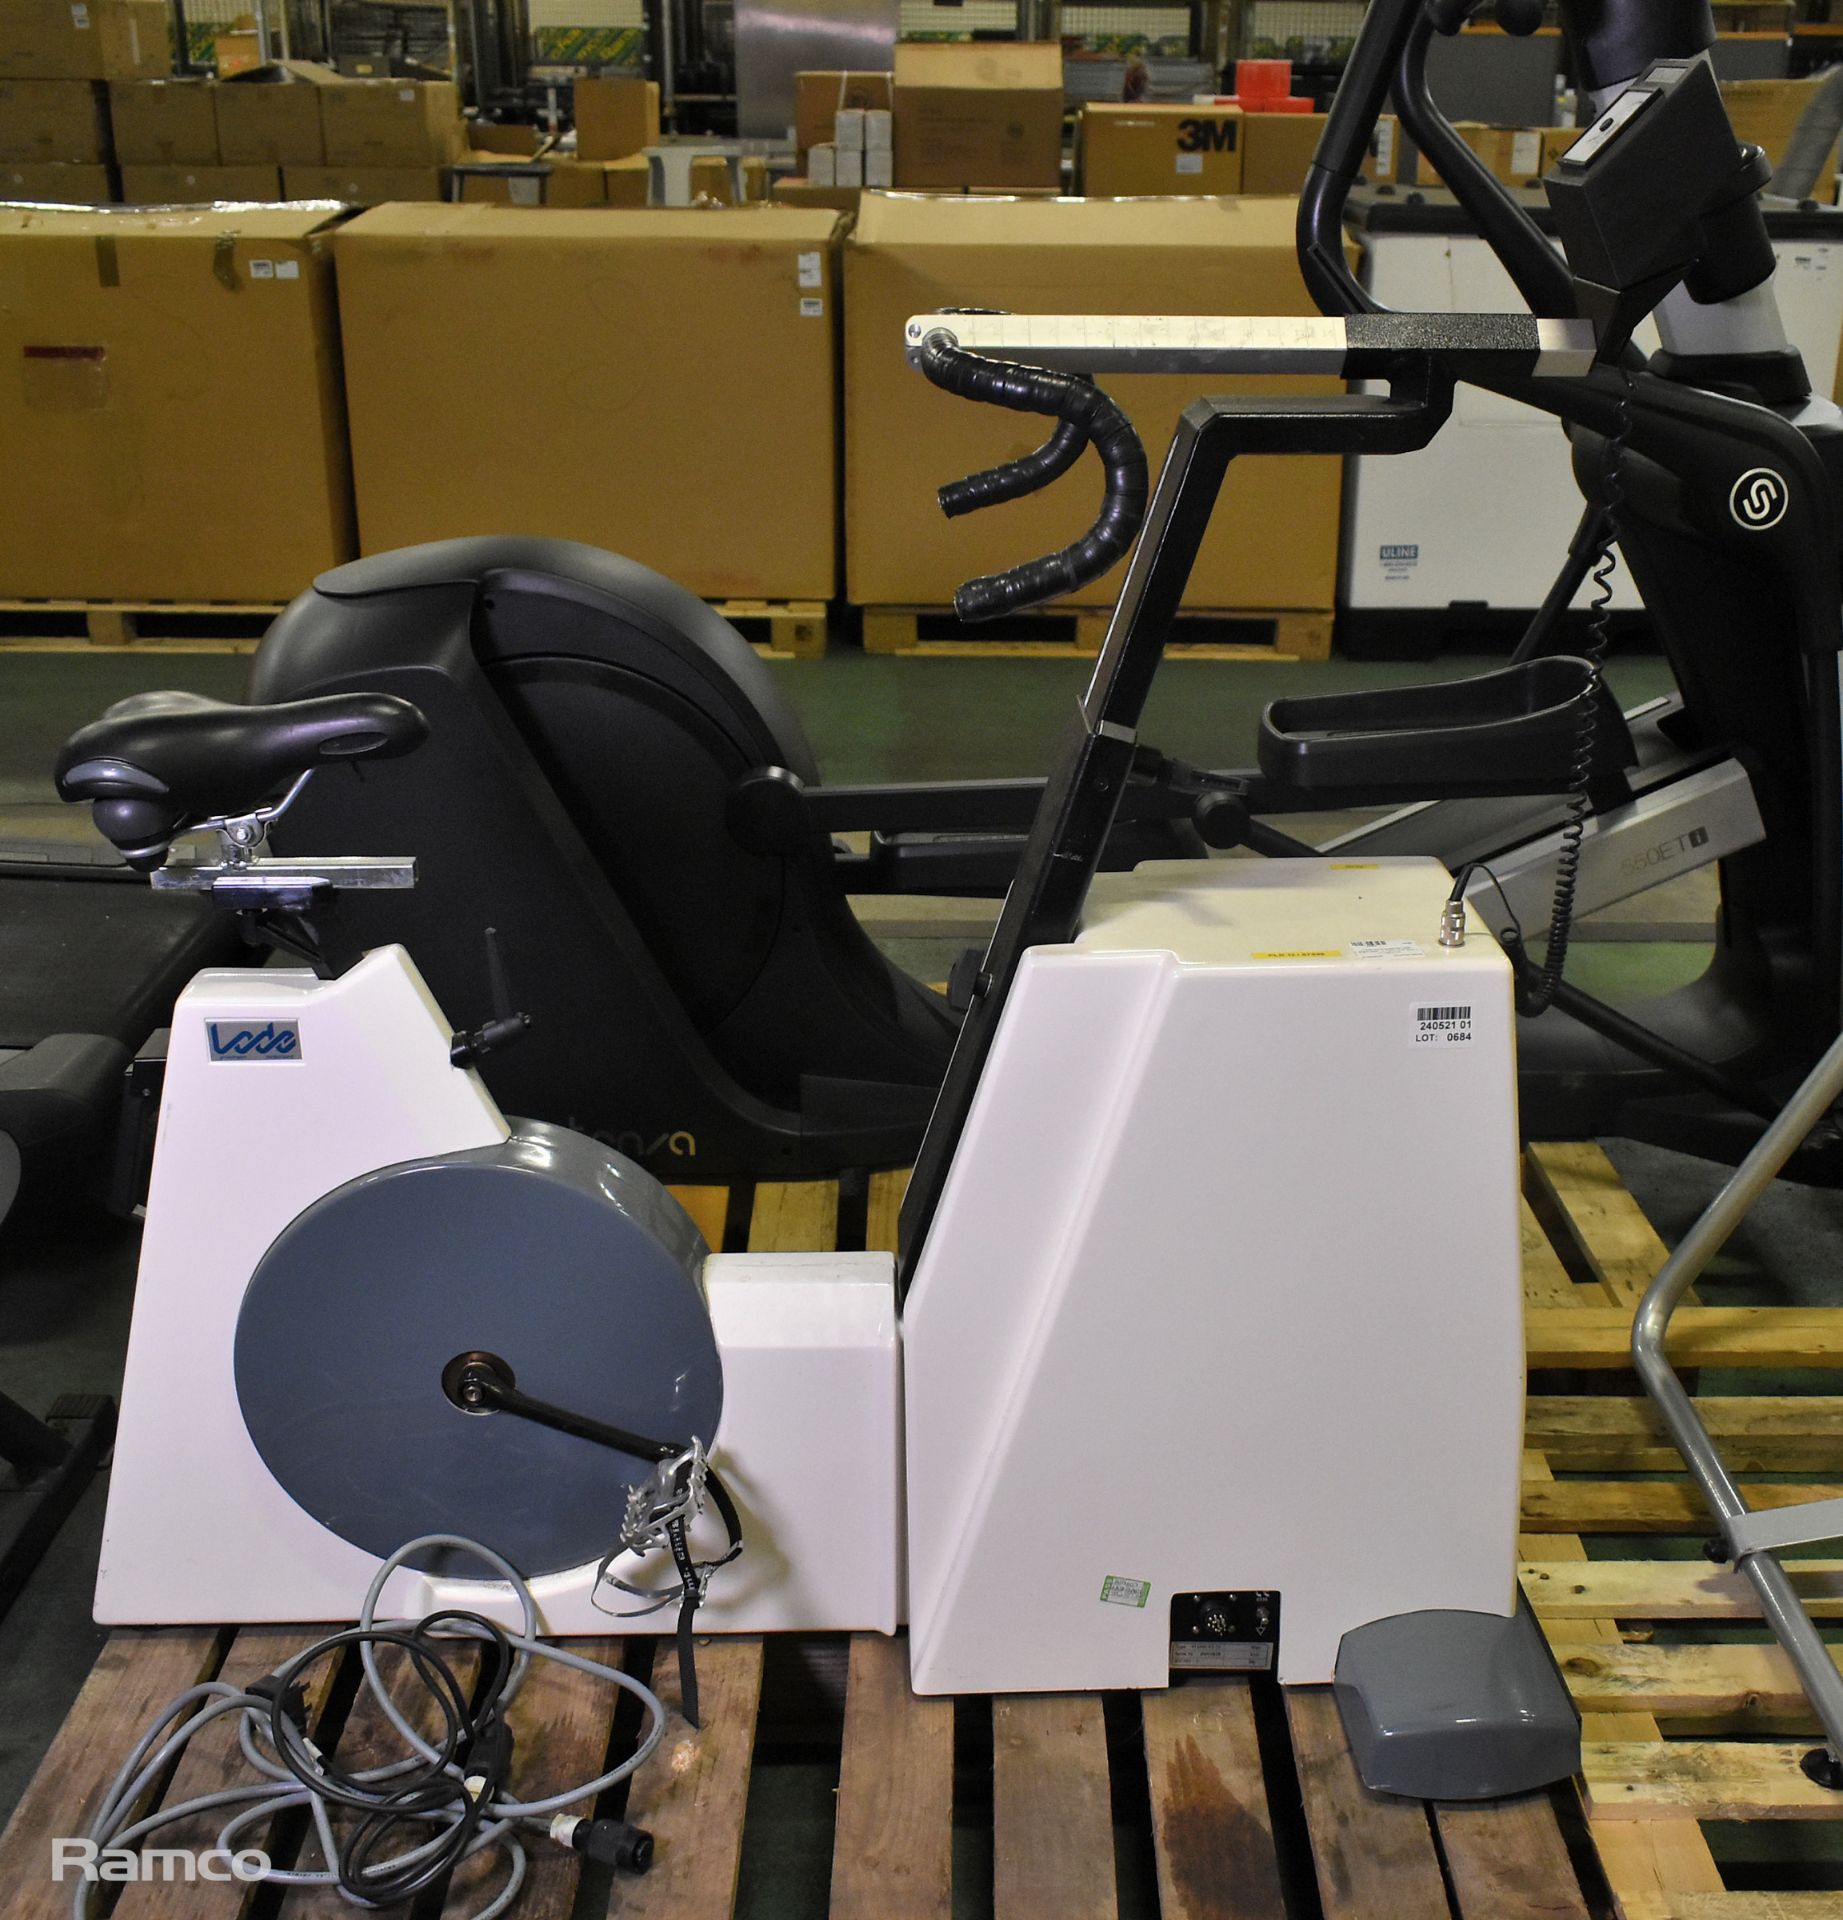 Lode sport exercise bike ergometer - L 1270 x W 600 x H 1280mm